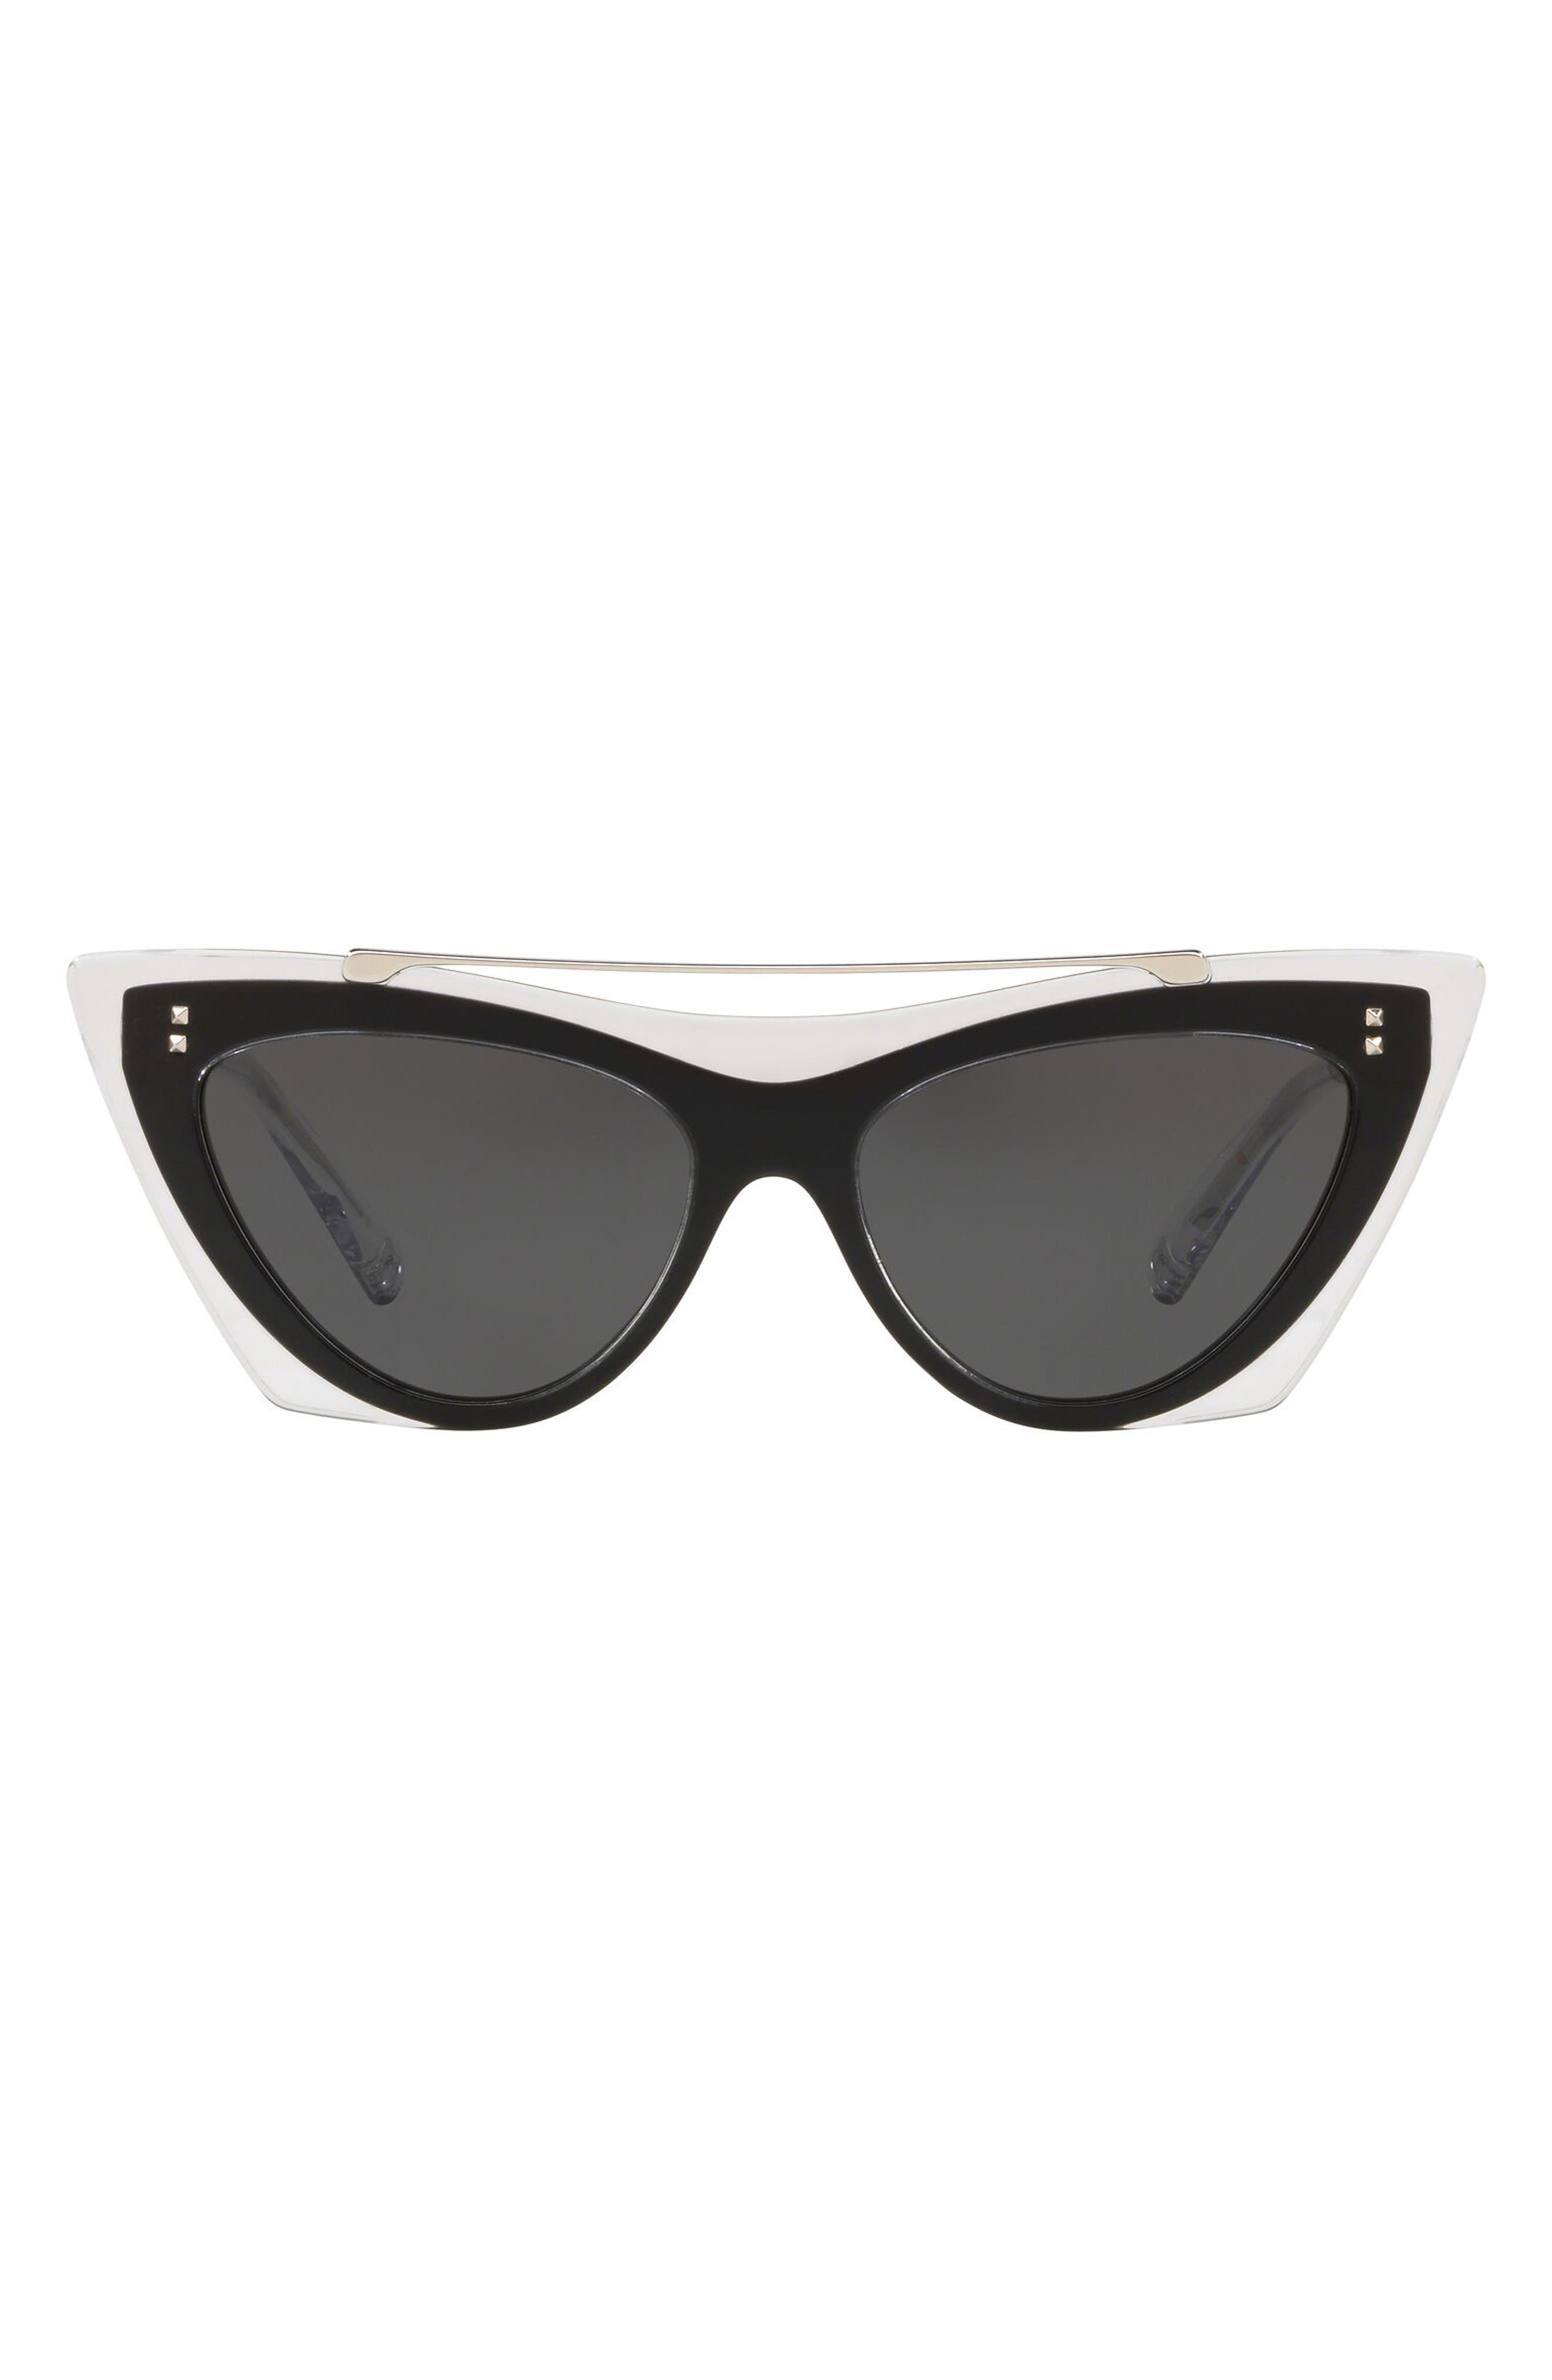 Valentino 53mm Cat Eye Sunglasses in Black Crystal/Black Solid at Nordstrom